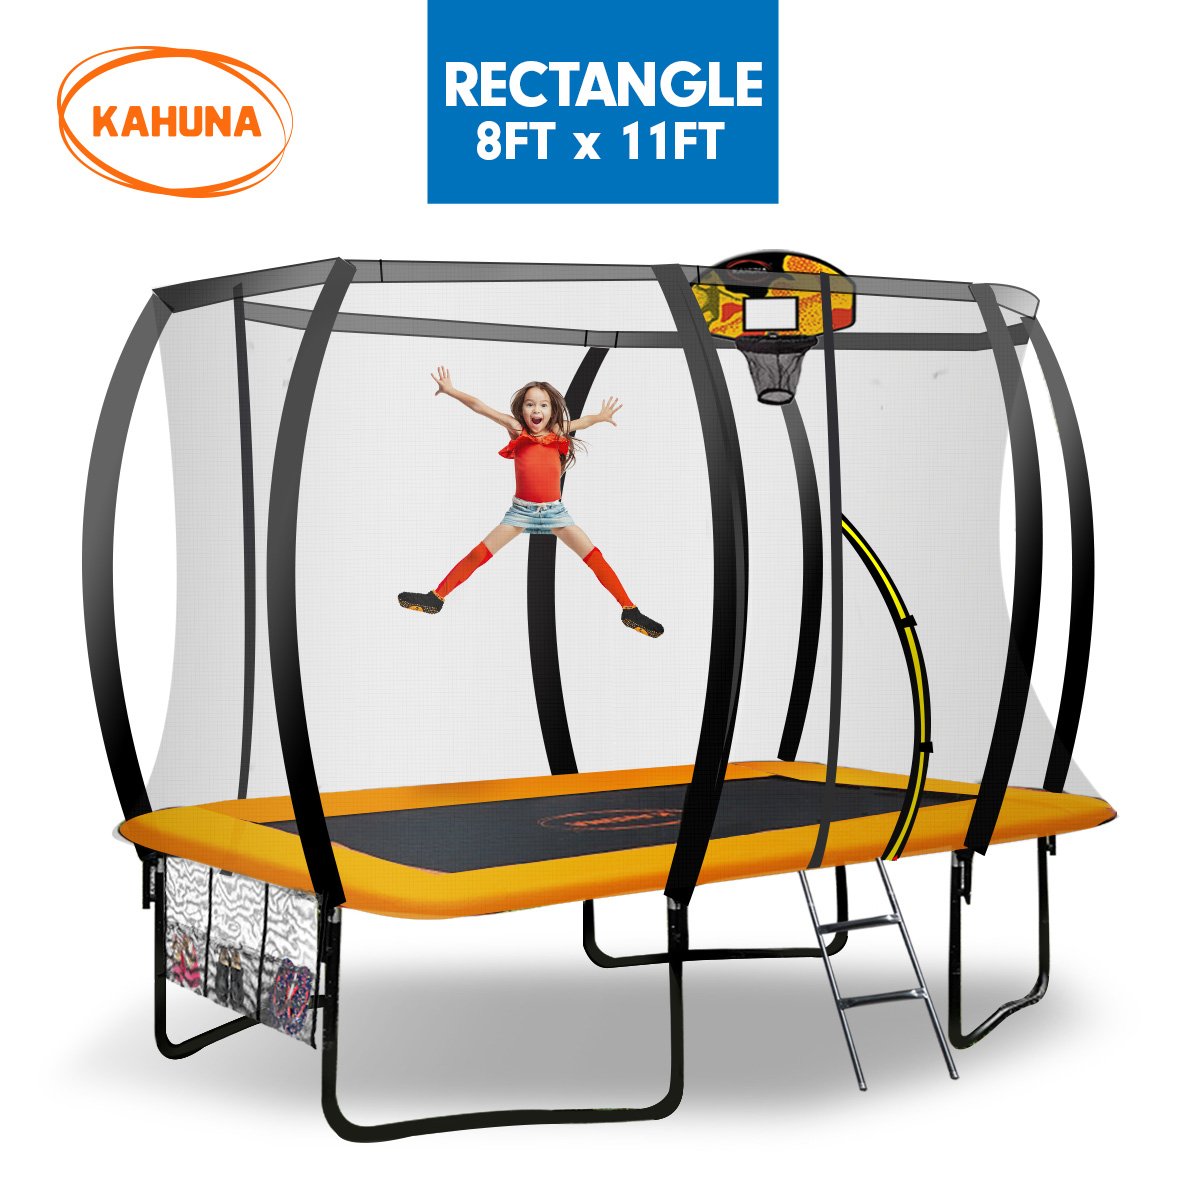 Kahuna Trampoline 8 ft x 11 ft Rectangular with Basketball Set 2